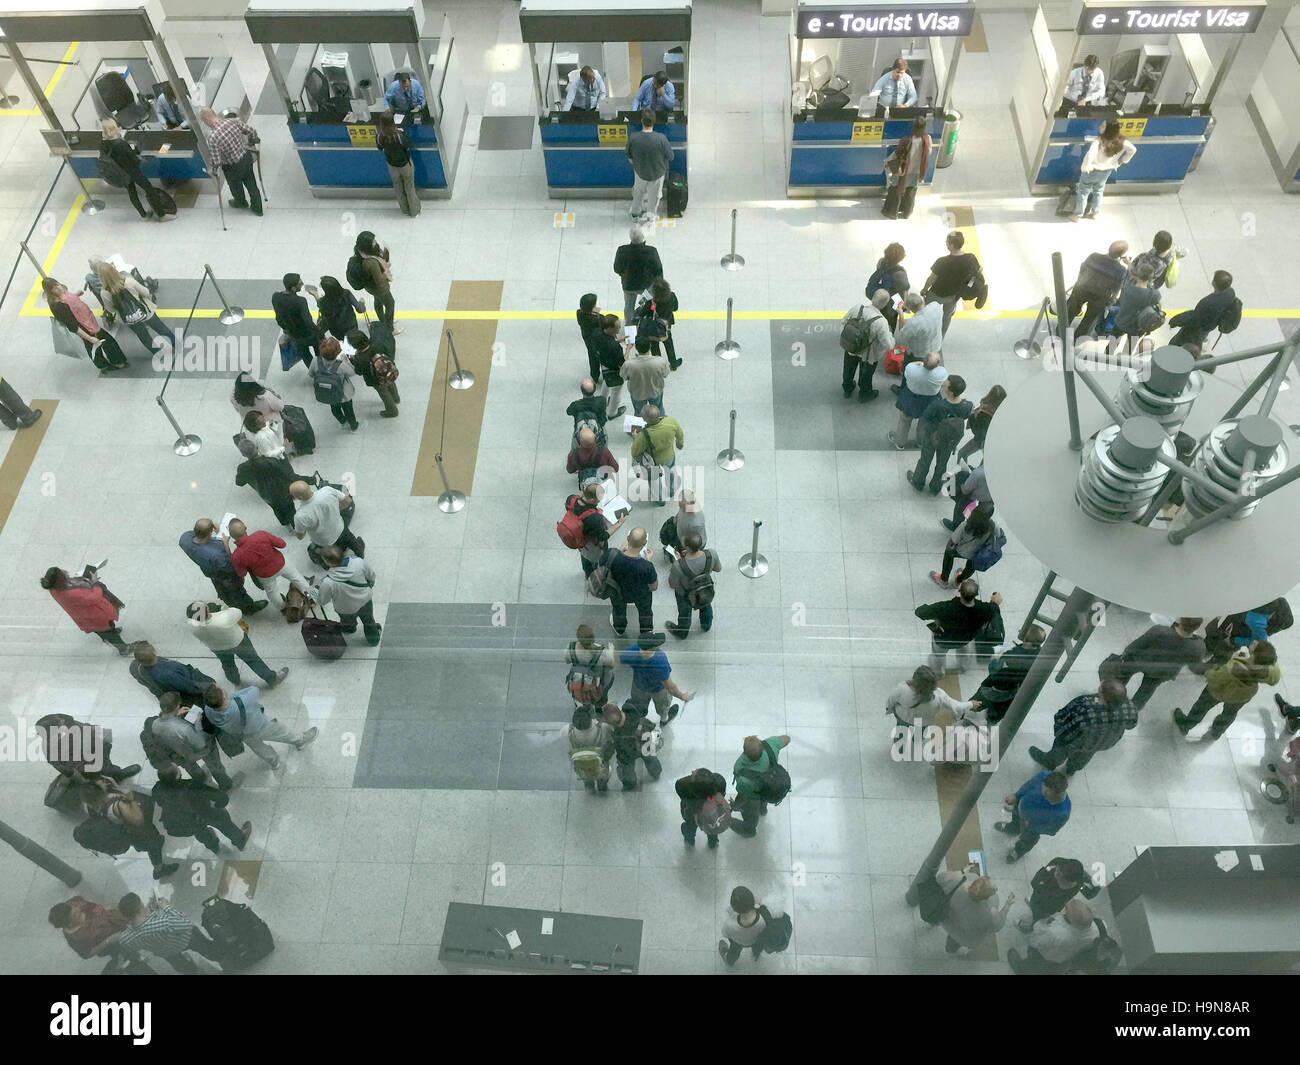 ARRIVALS HALL DELHI Flughafen Foto Tony Gale Stockfoto